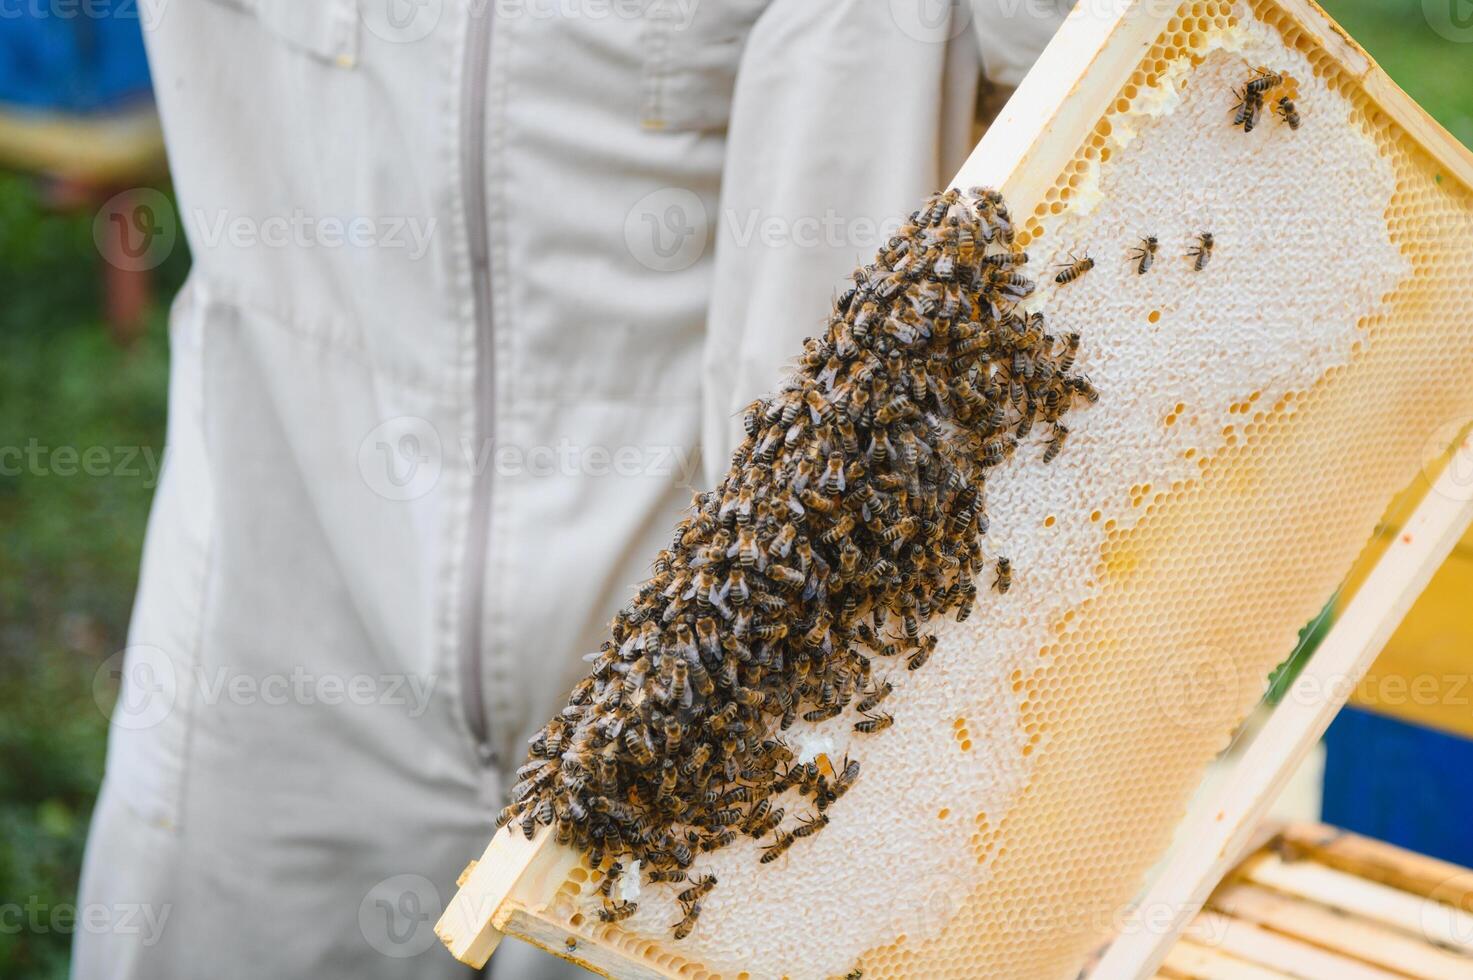 Beekeeper working collect honey. Beekeeping concept. photo